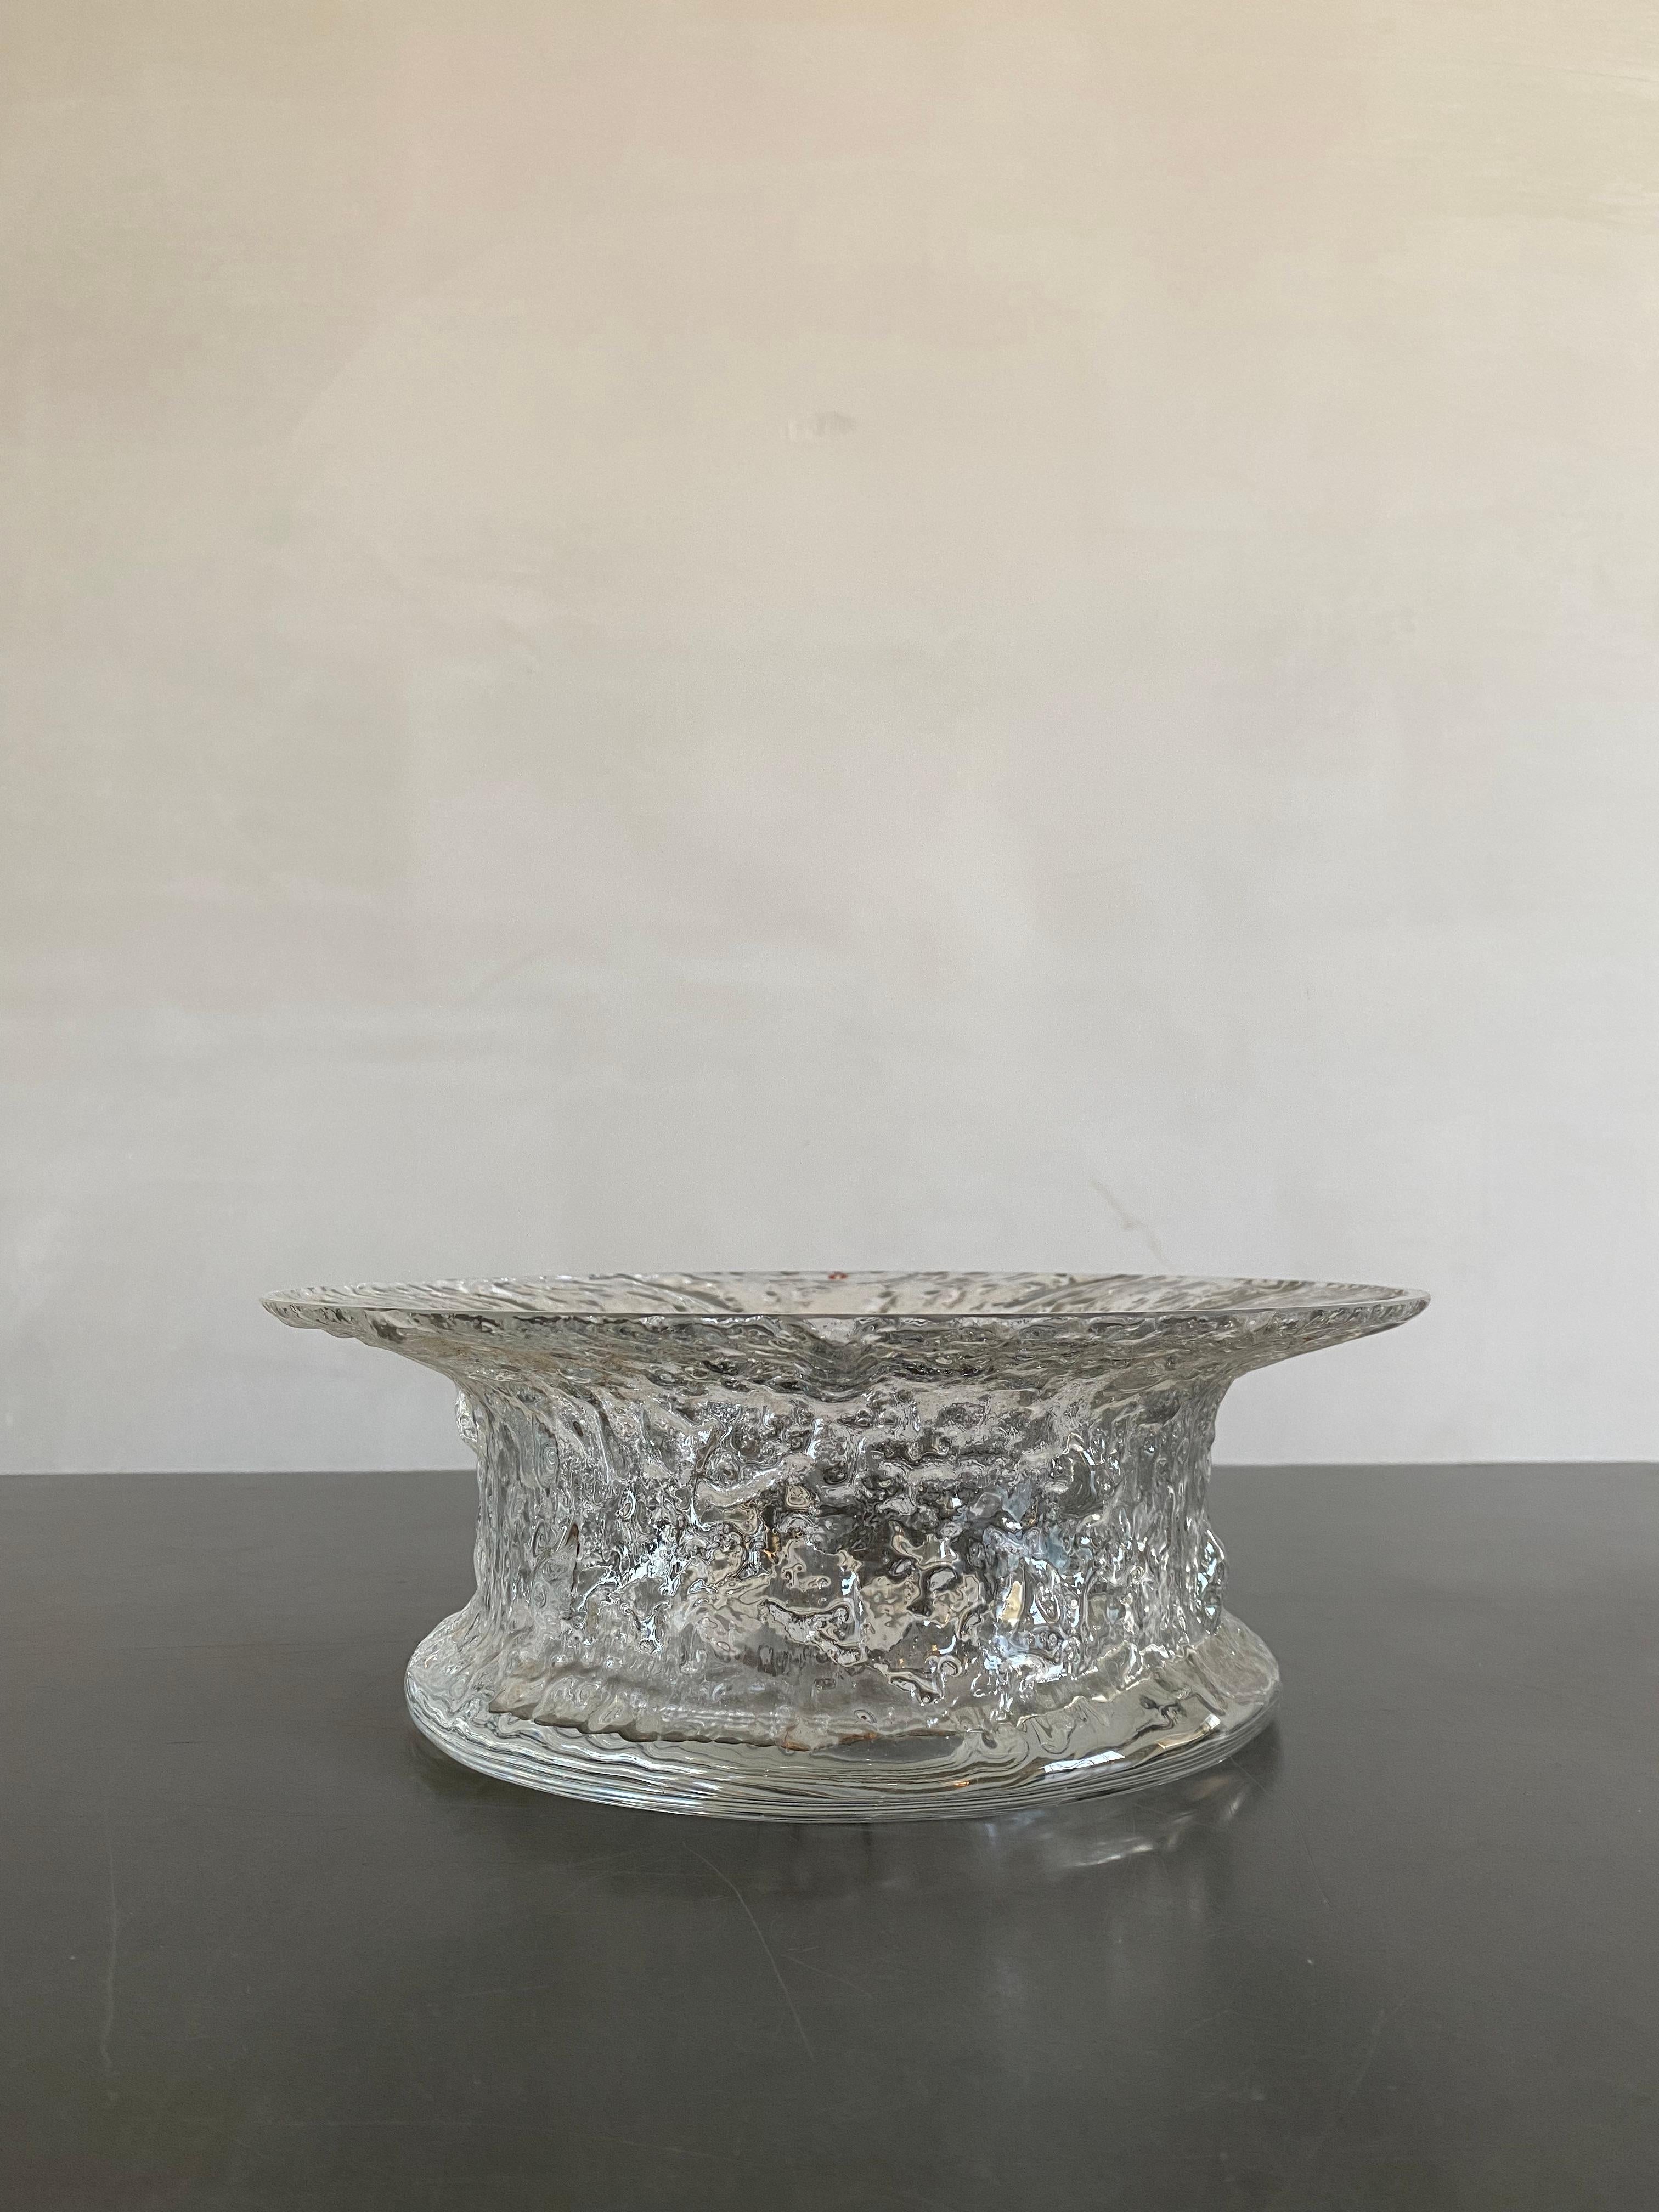 Scandinavian Modern Timo Sarpaneva for Ittala Moulded Glass Vase, Finland, 1960s For Sale